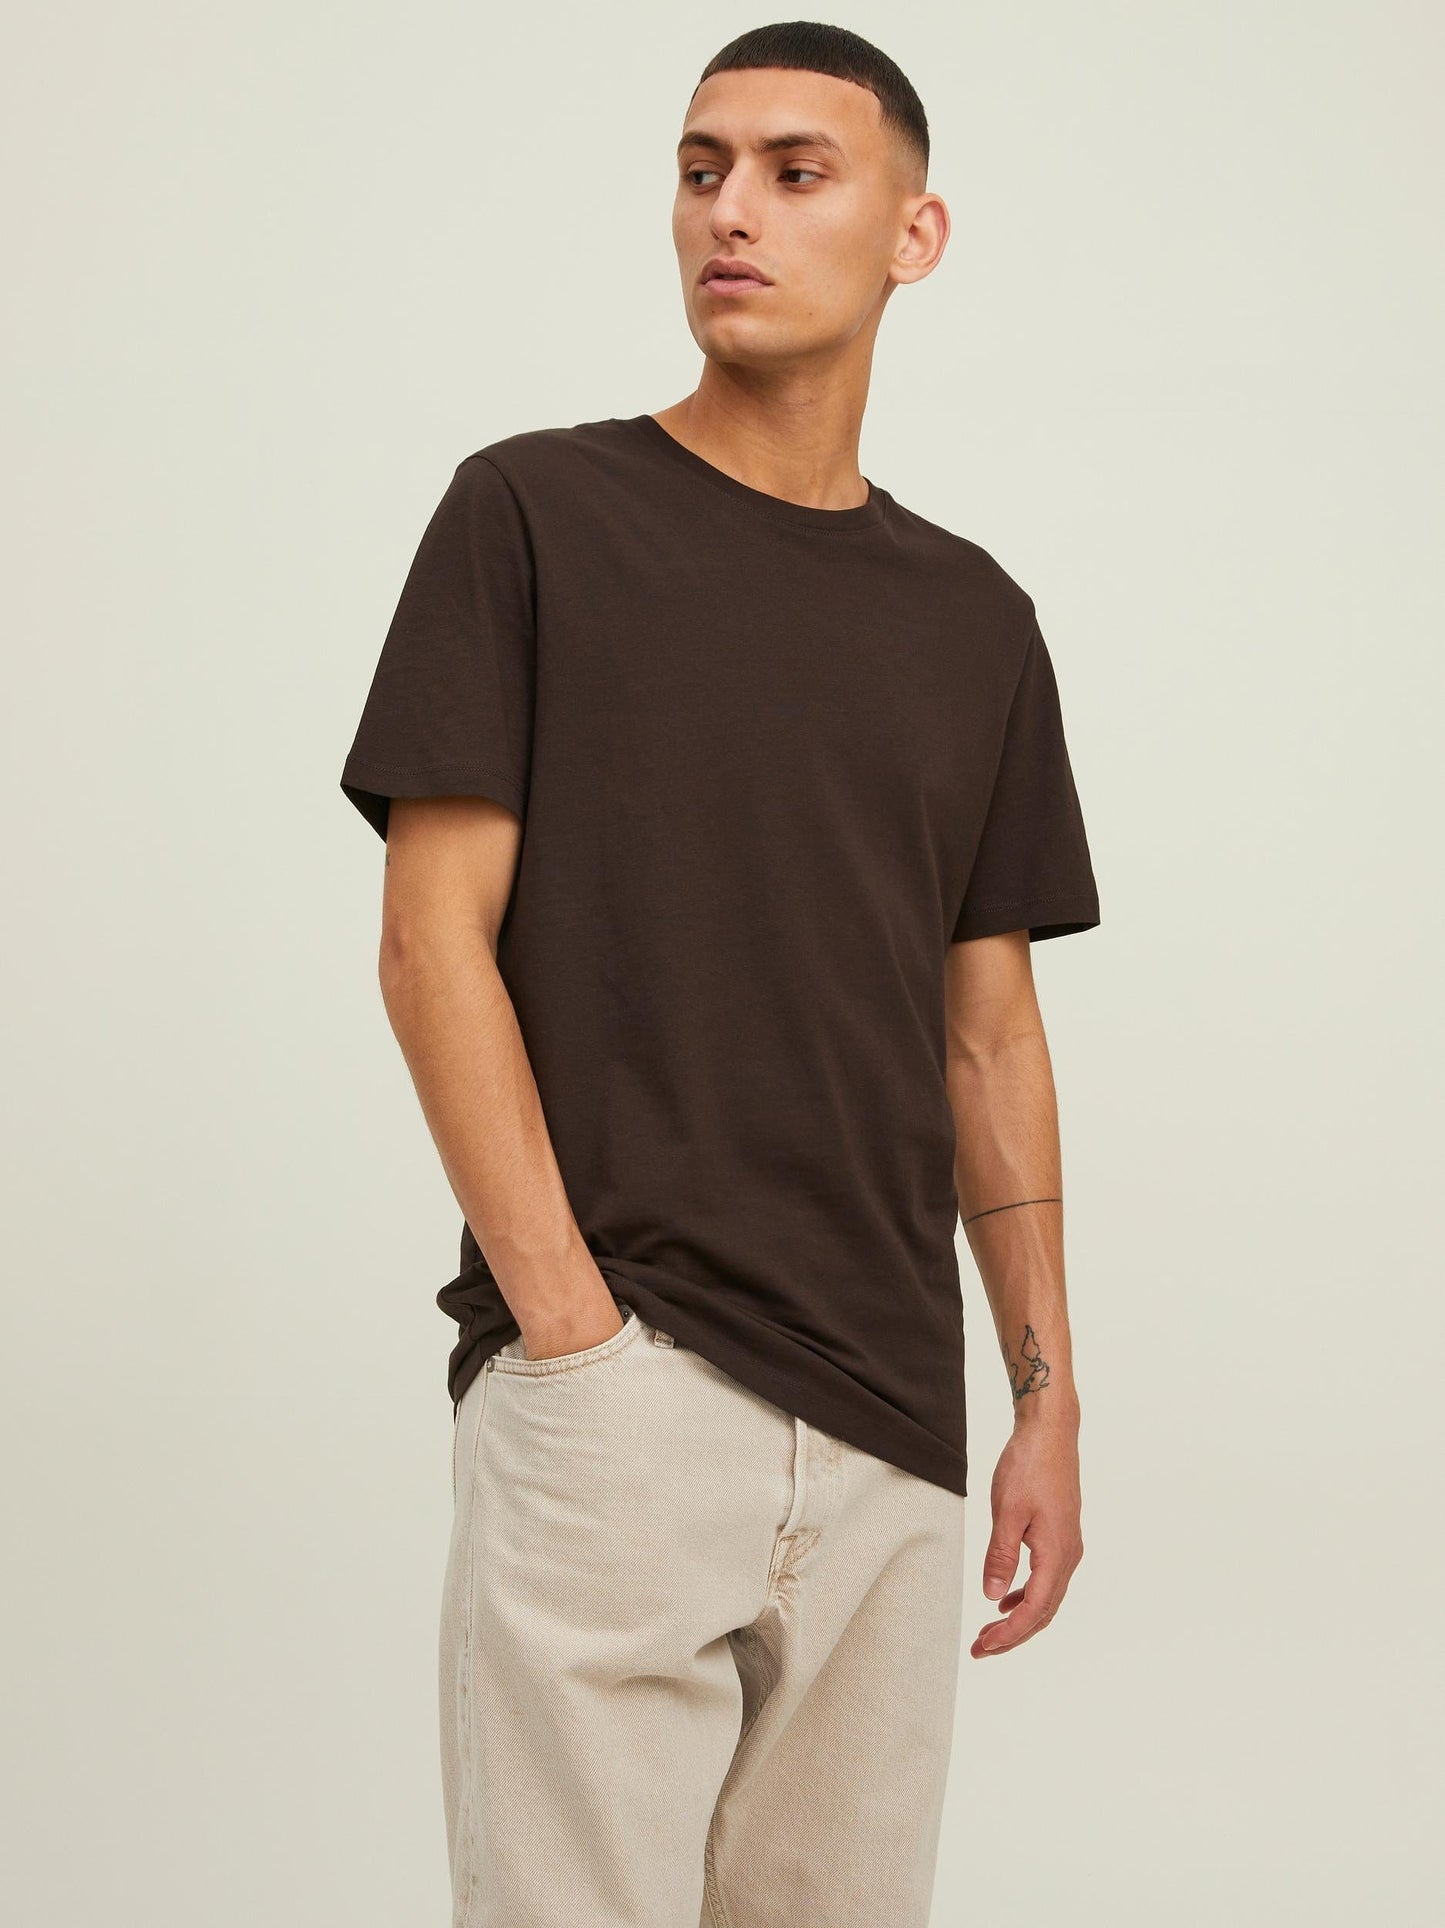 Camiseta básica marrón -JJEORGANIC